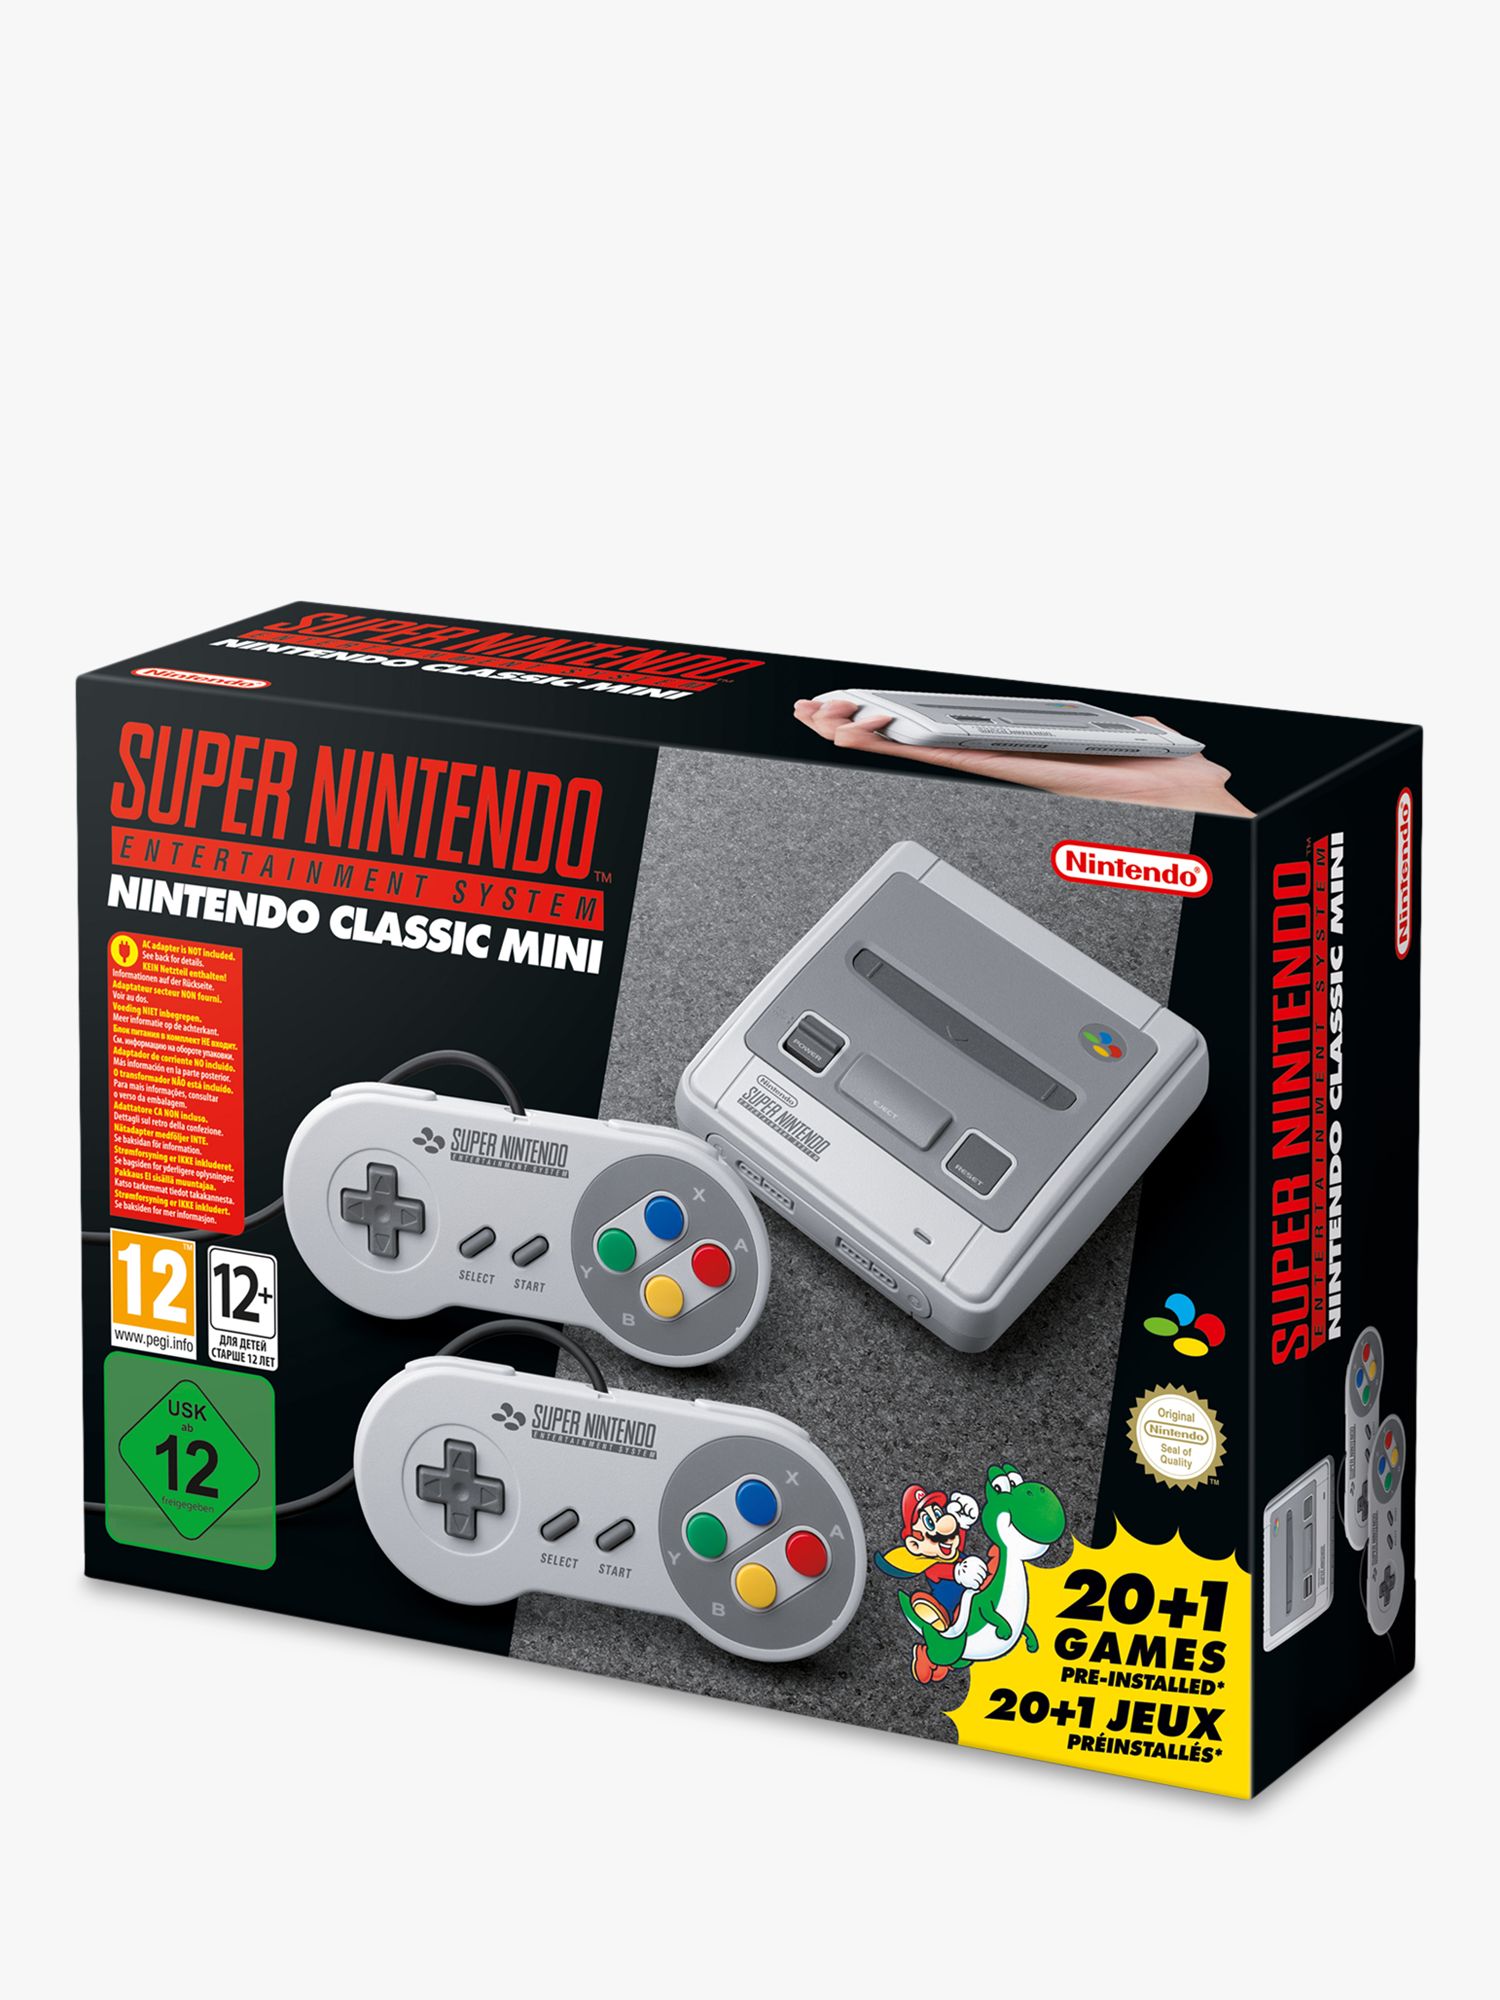 Buy the Super Nintendo Mini